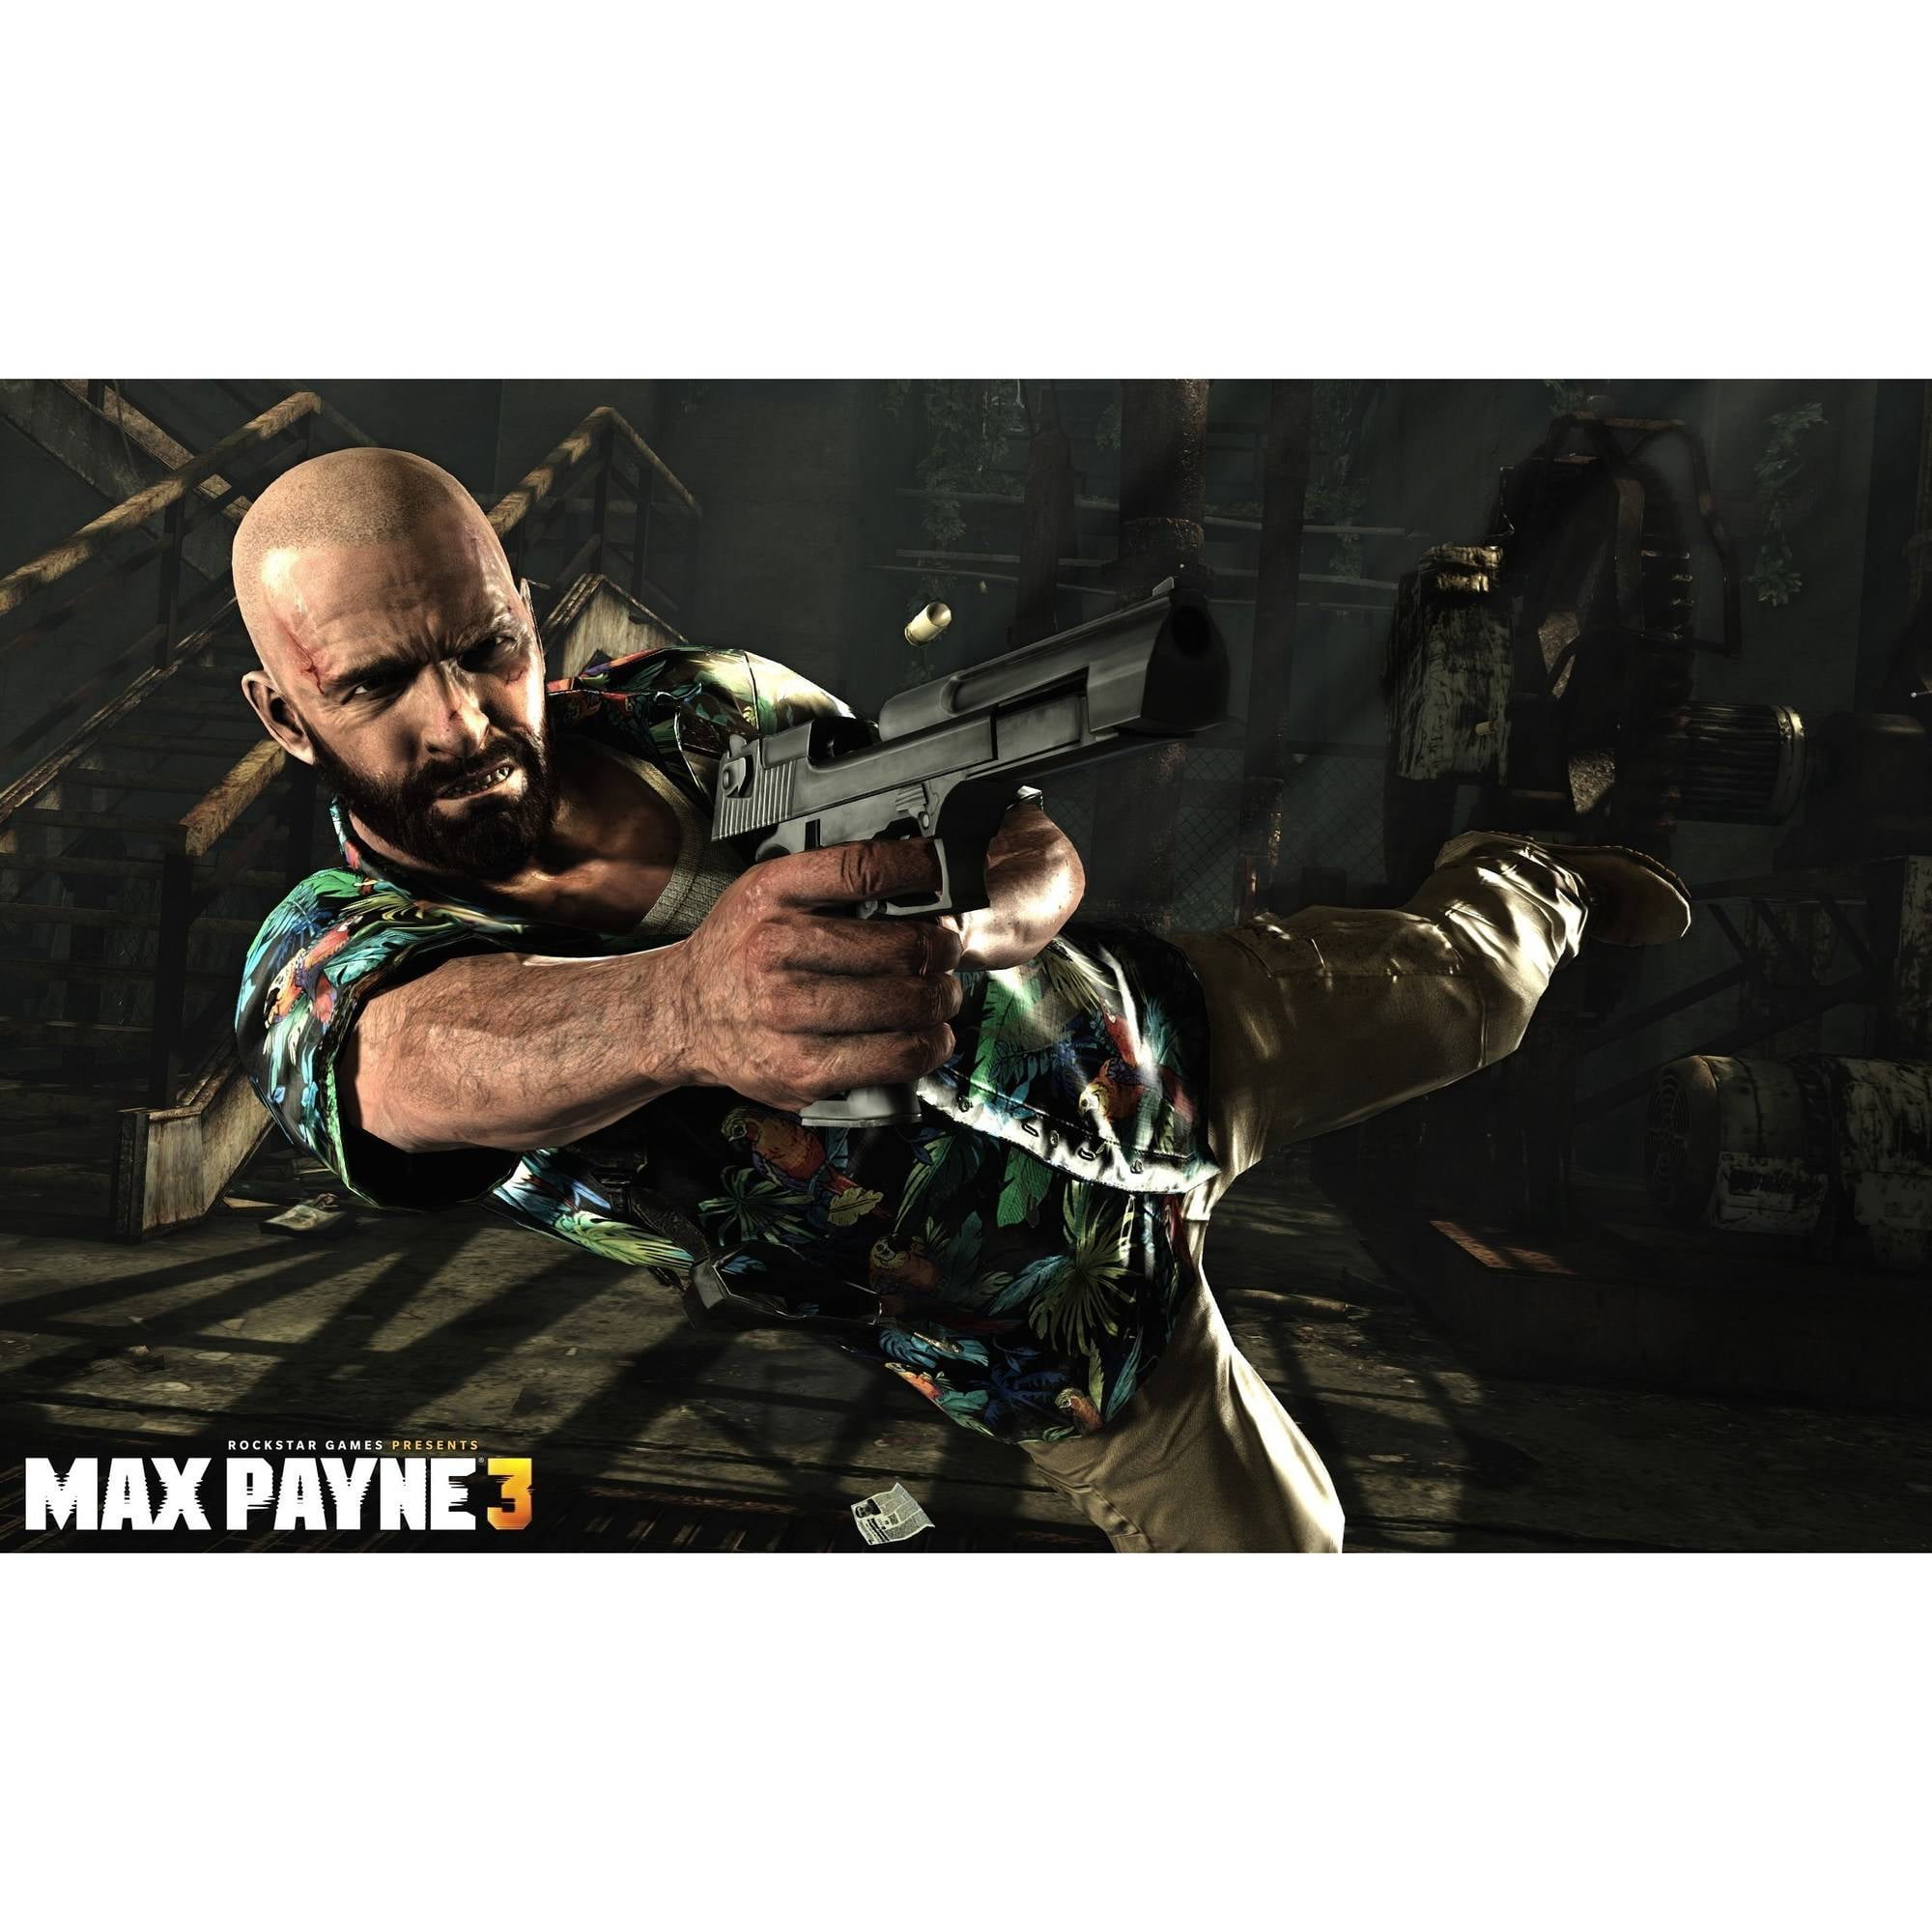 Max Payne 3 Xbox 360 - Rockstar Games - Brinquedos e Games FL Shop